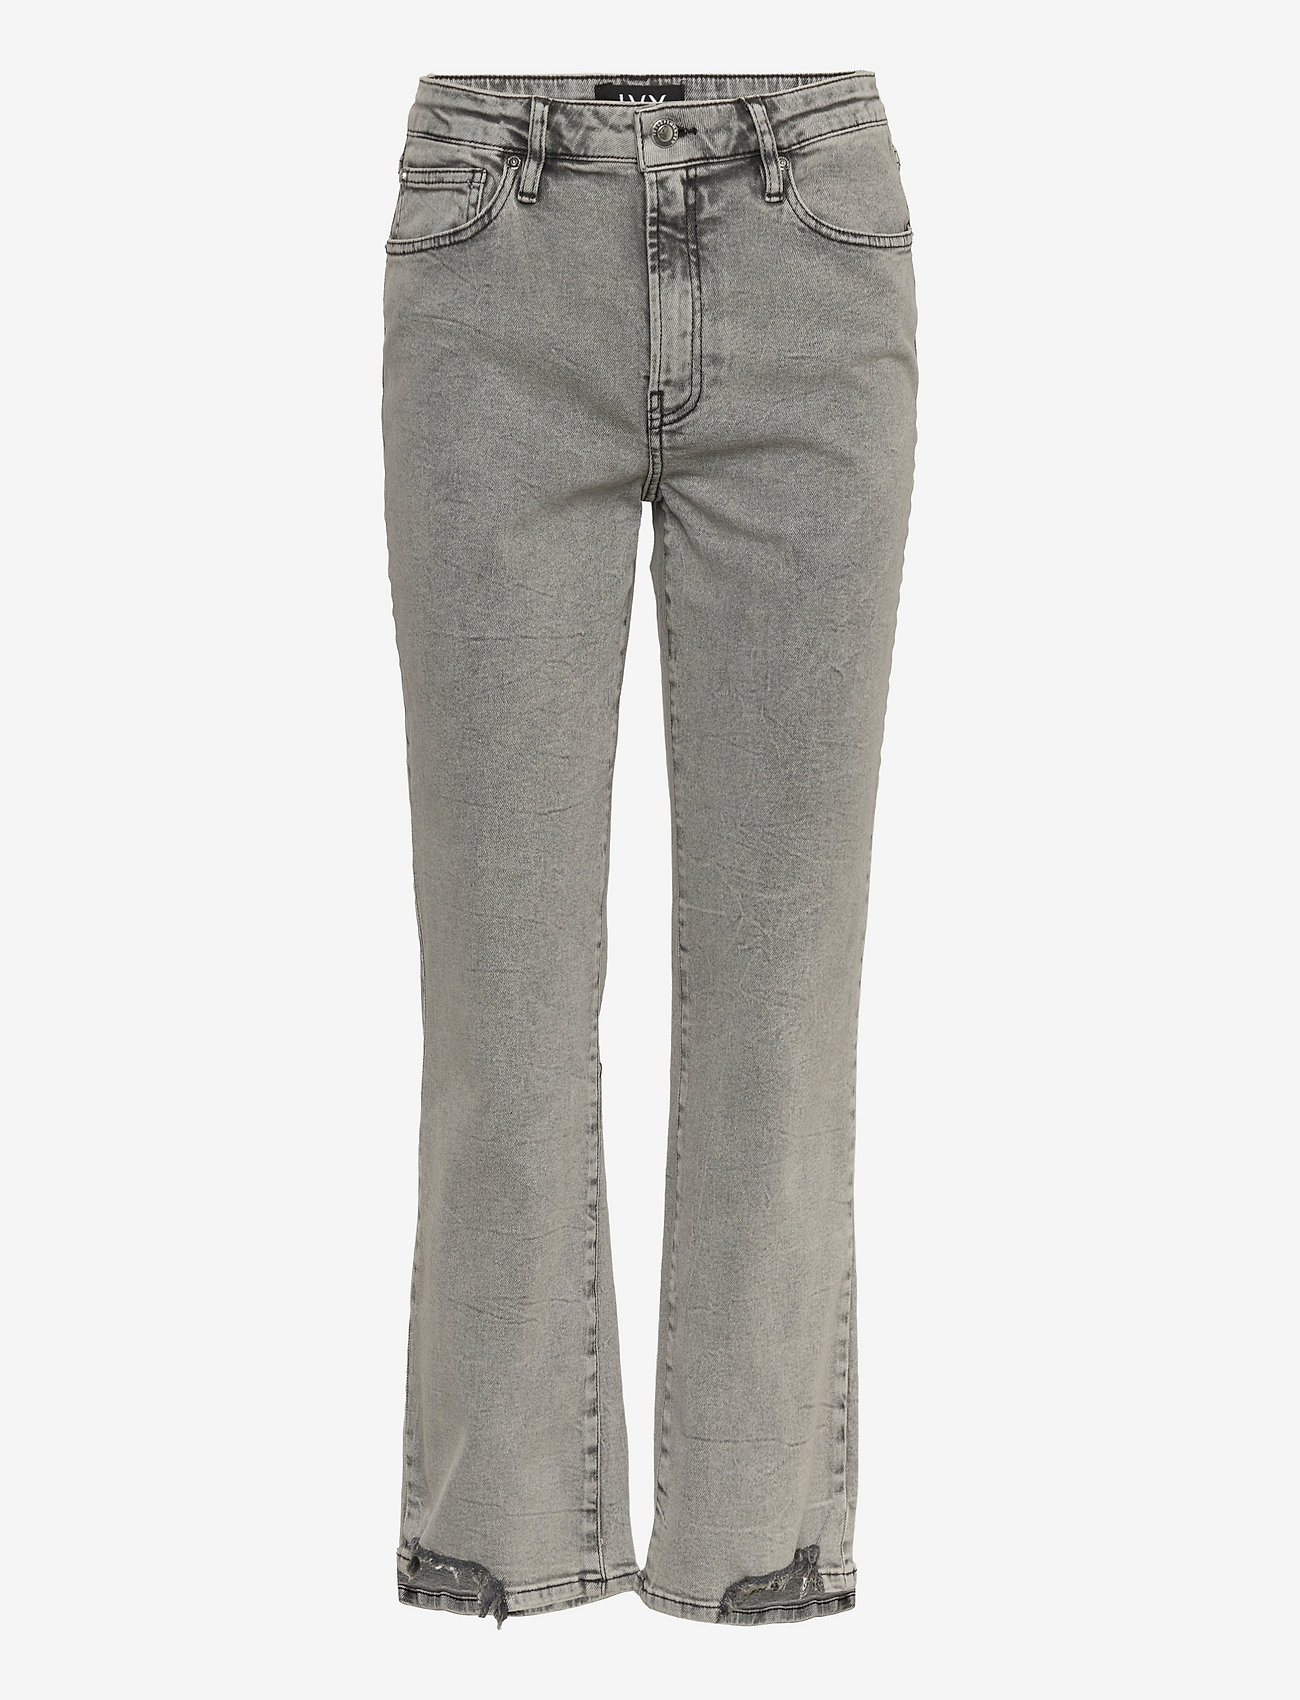 IVY Copenhagen - Frida Jeans wash Pulp Grey Dist. - tiesaus kirpimo džinsai - grey - 0